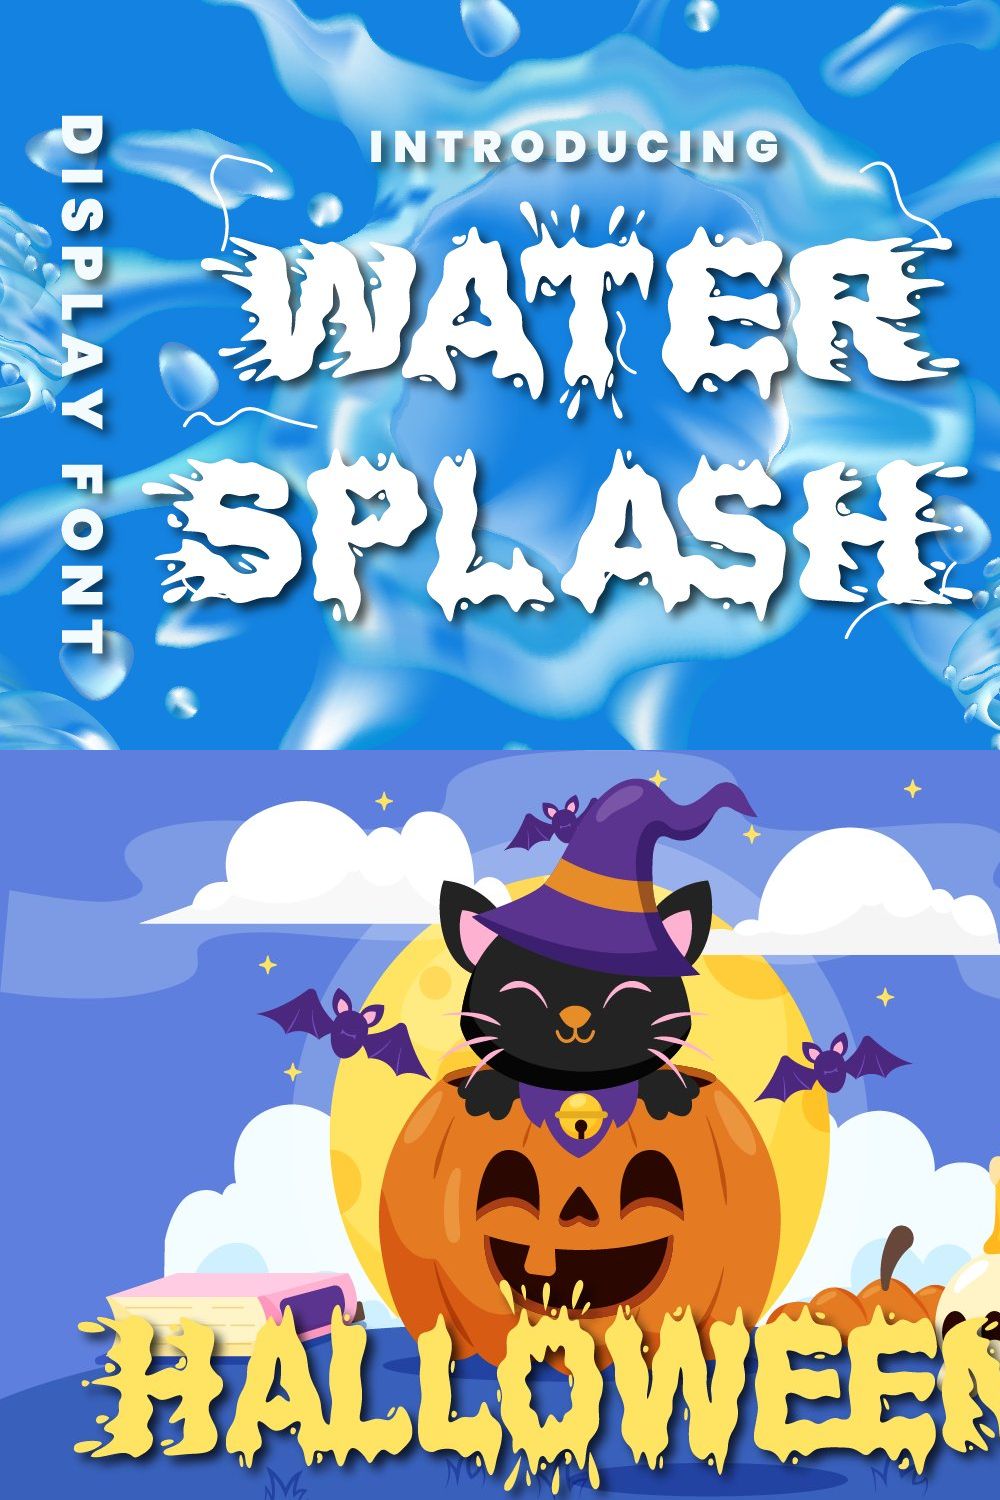 Water Splash - Creative Display Font pinterest preview image.